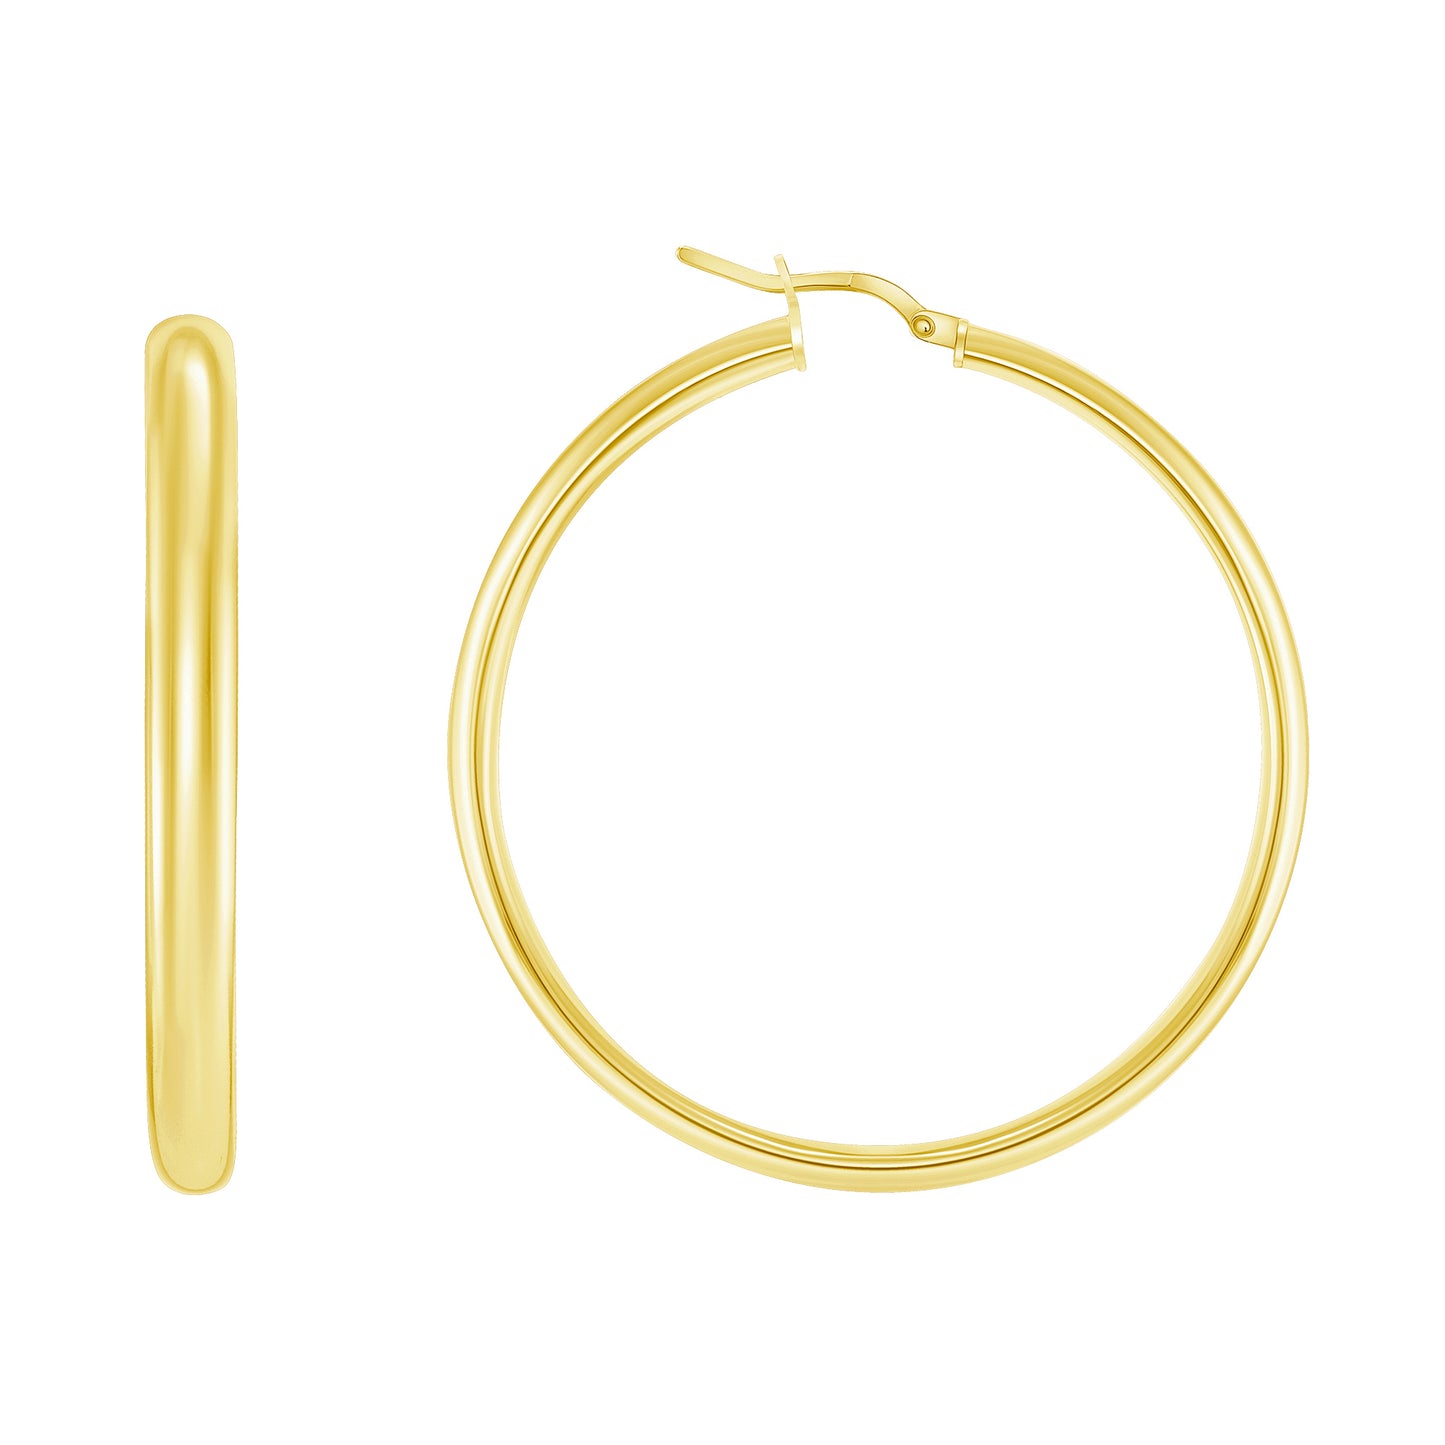 Silver 925 45 x 5 mm. Italian Yellow Gold Plated Plain Hoop Earring. ITHP132-45MG